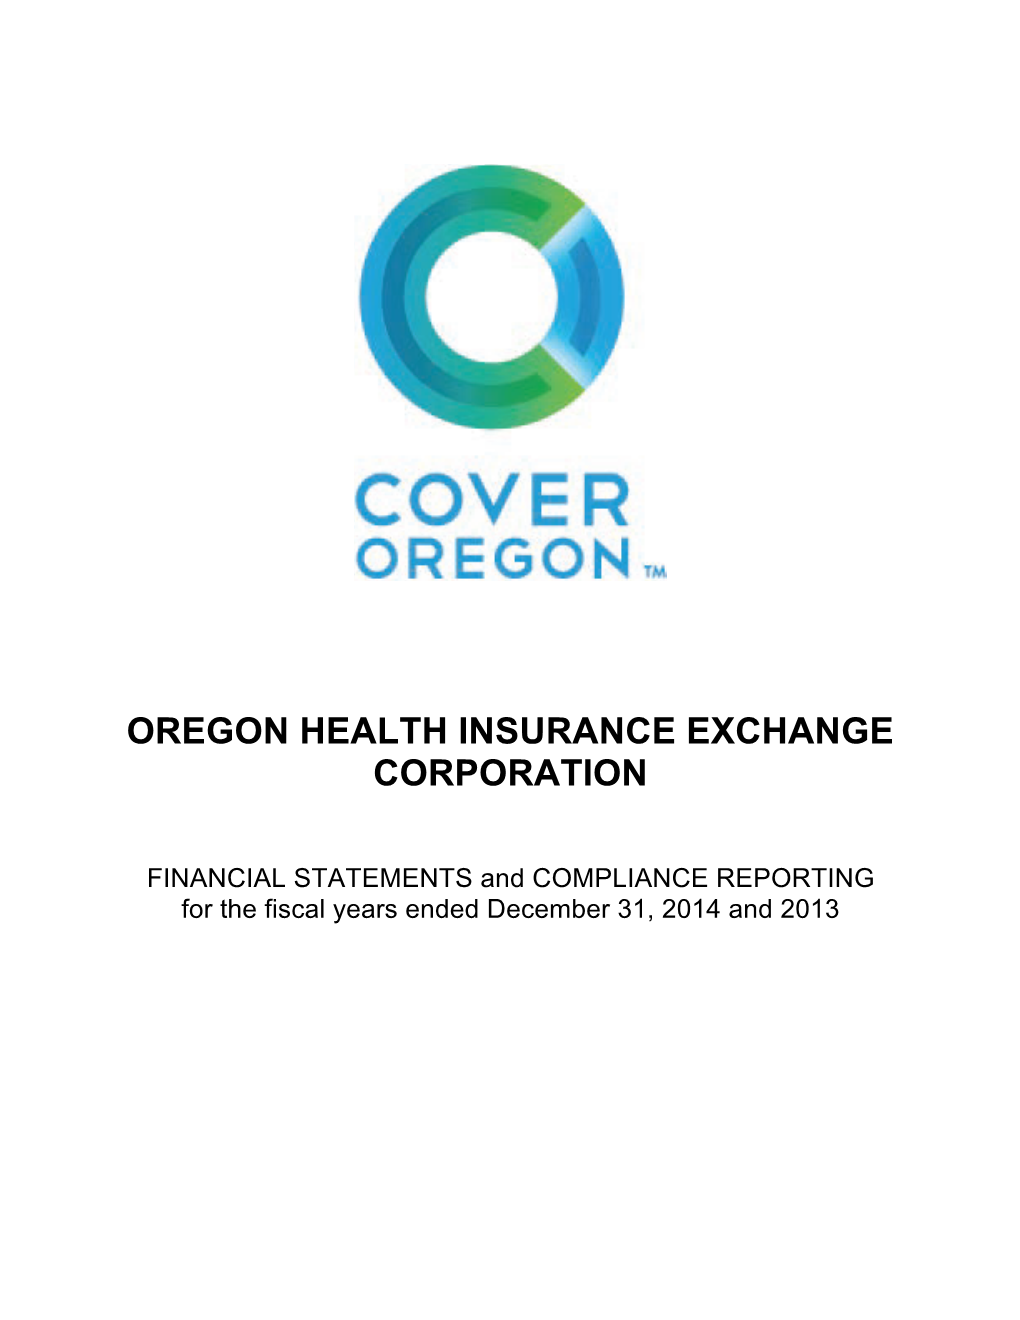 Oregon Health Insurance Exchange Corporation